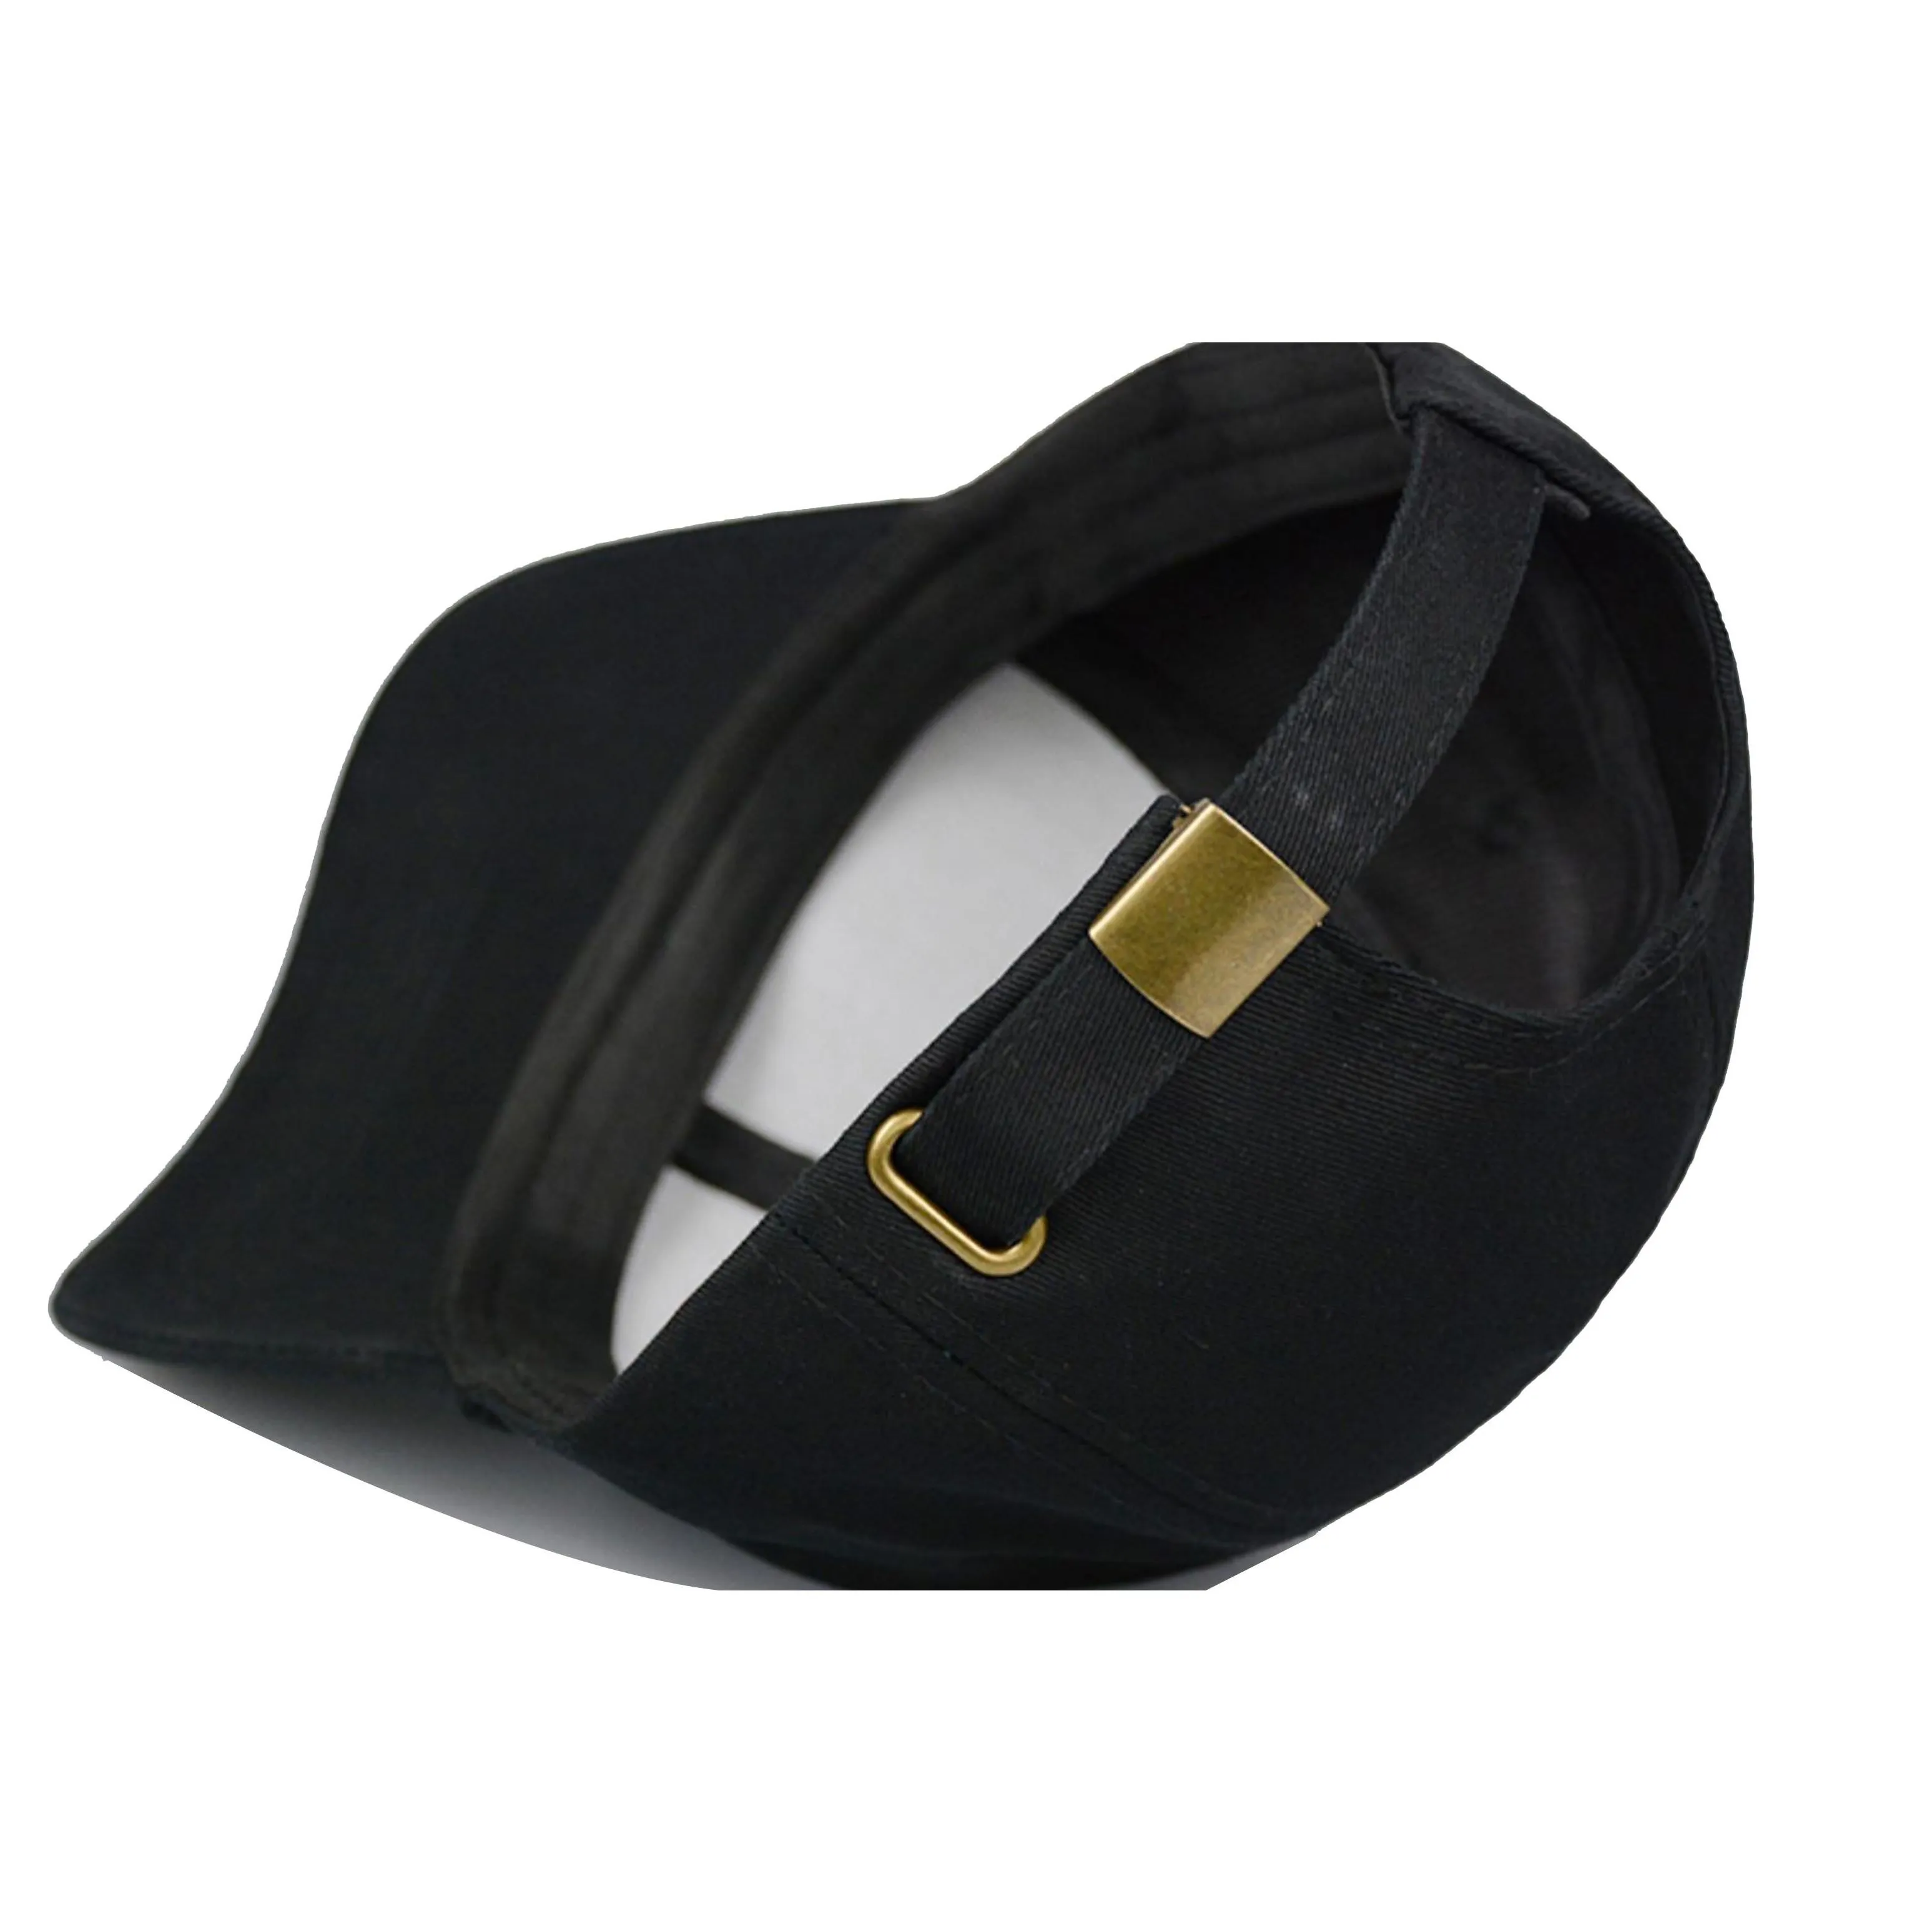 Golden State Basketball Hat Unisex Adult Adjustable Lightweight Outdoor Sports Fans Legends Baseball Cap